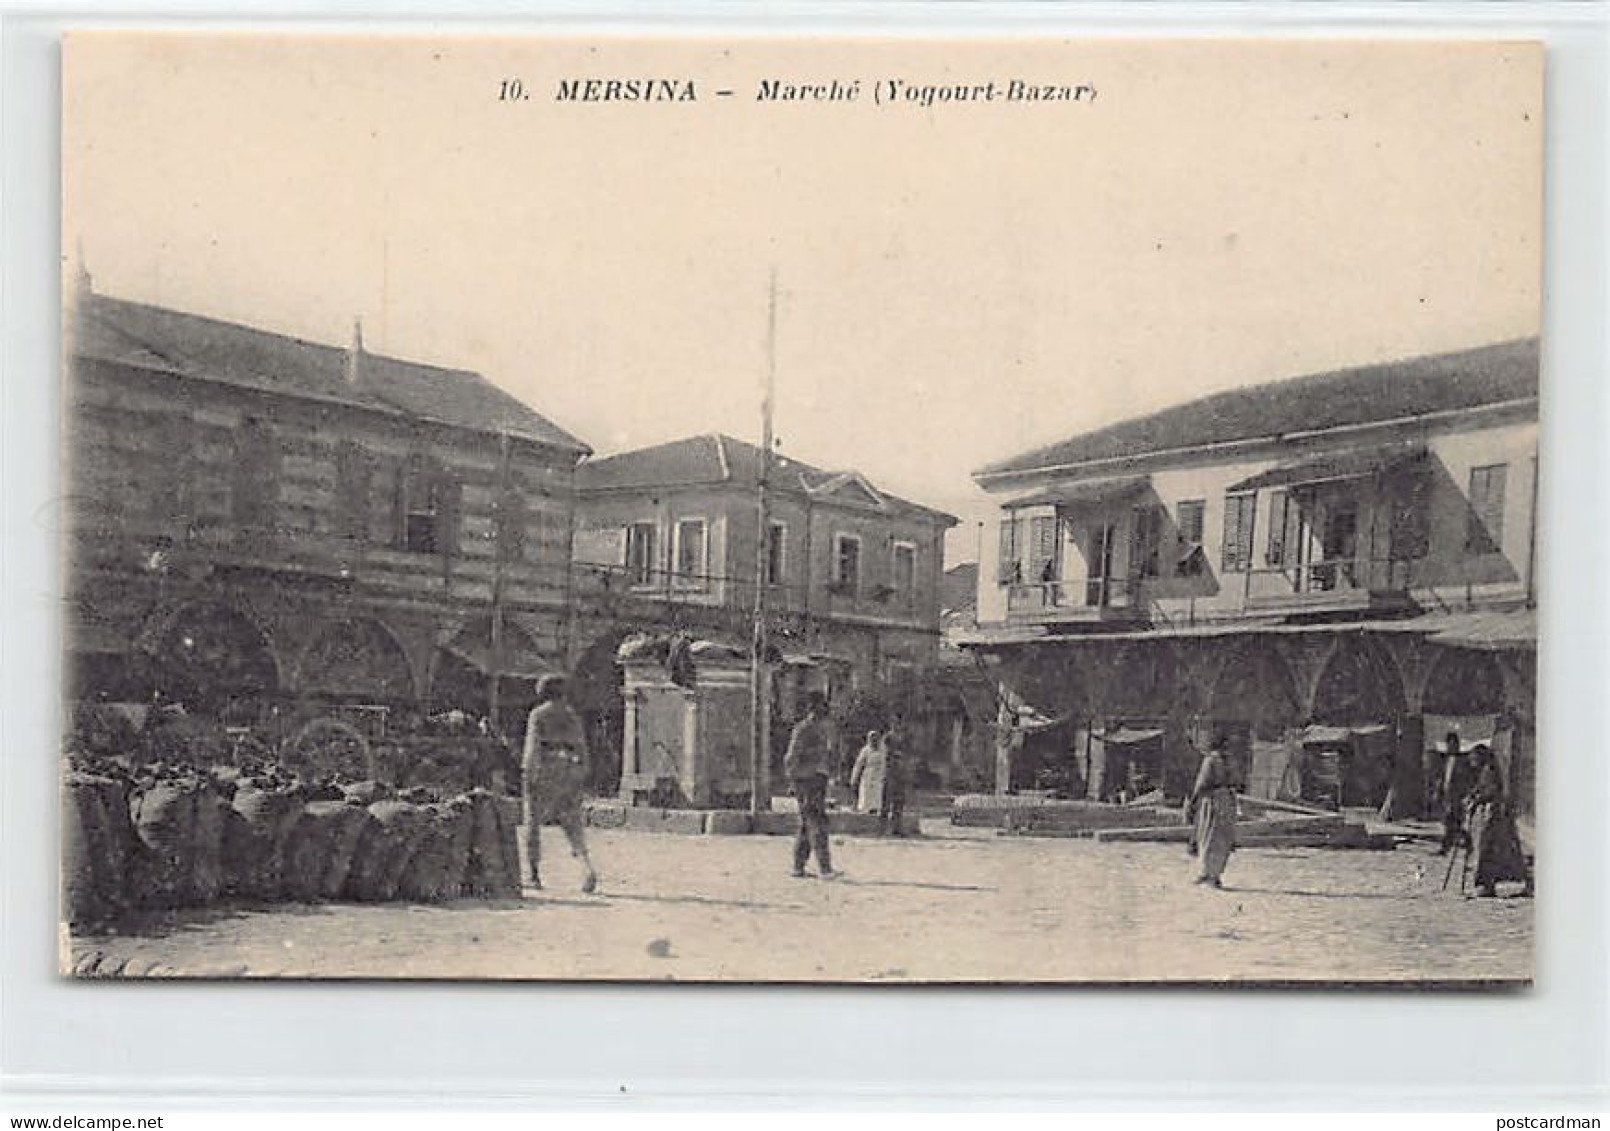 Turkey - MERSIN Mersina - Market - Yogourt-Bazar - Publ. K. Papadopoulos & Fils 10 - Turquie